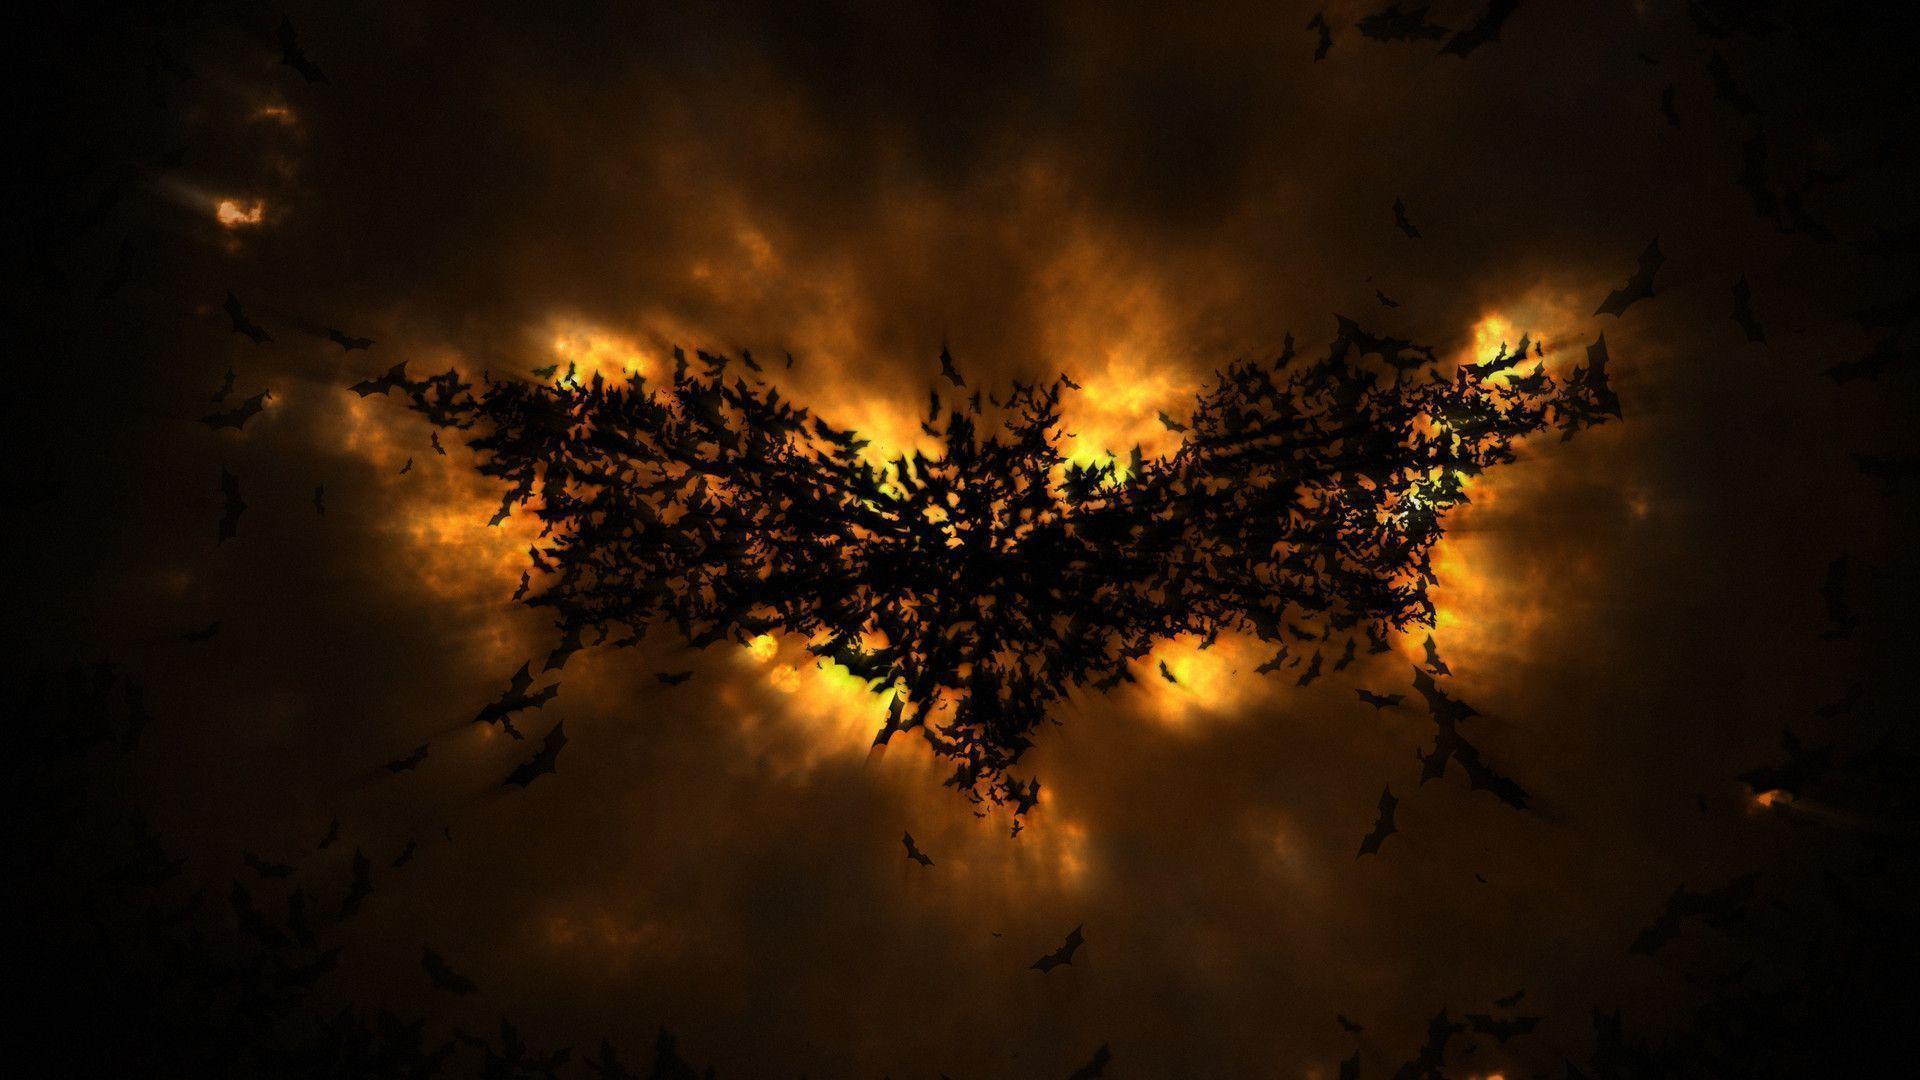 Wallpaper For > Batman The Dark Knight Wallpaper 1080p